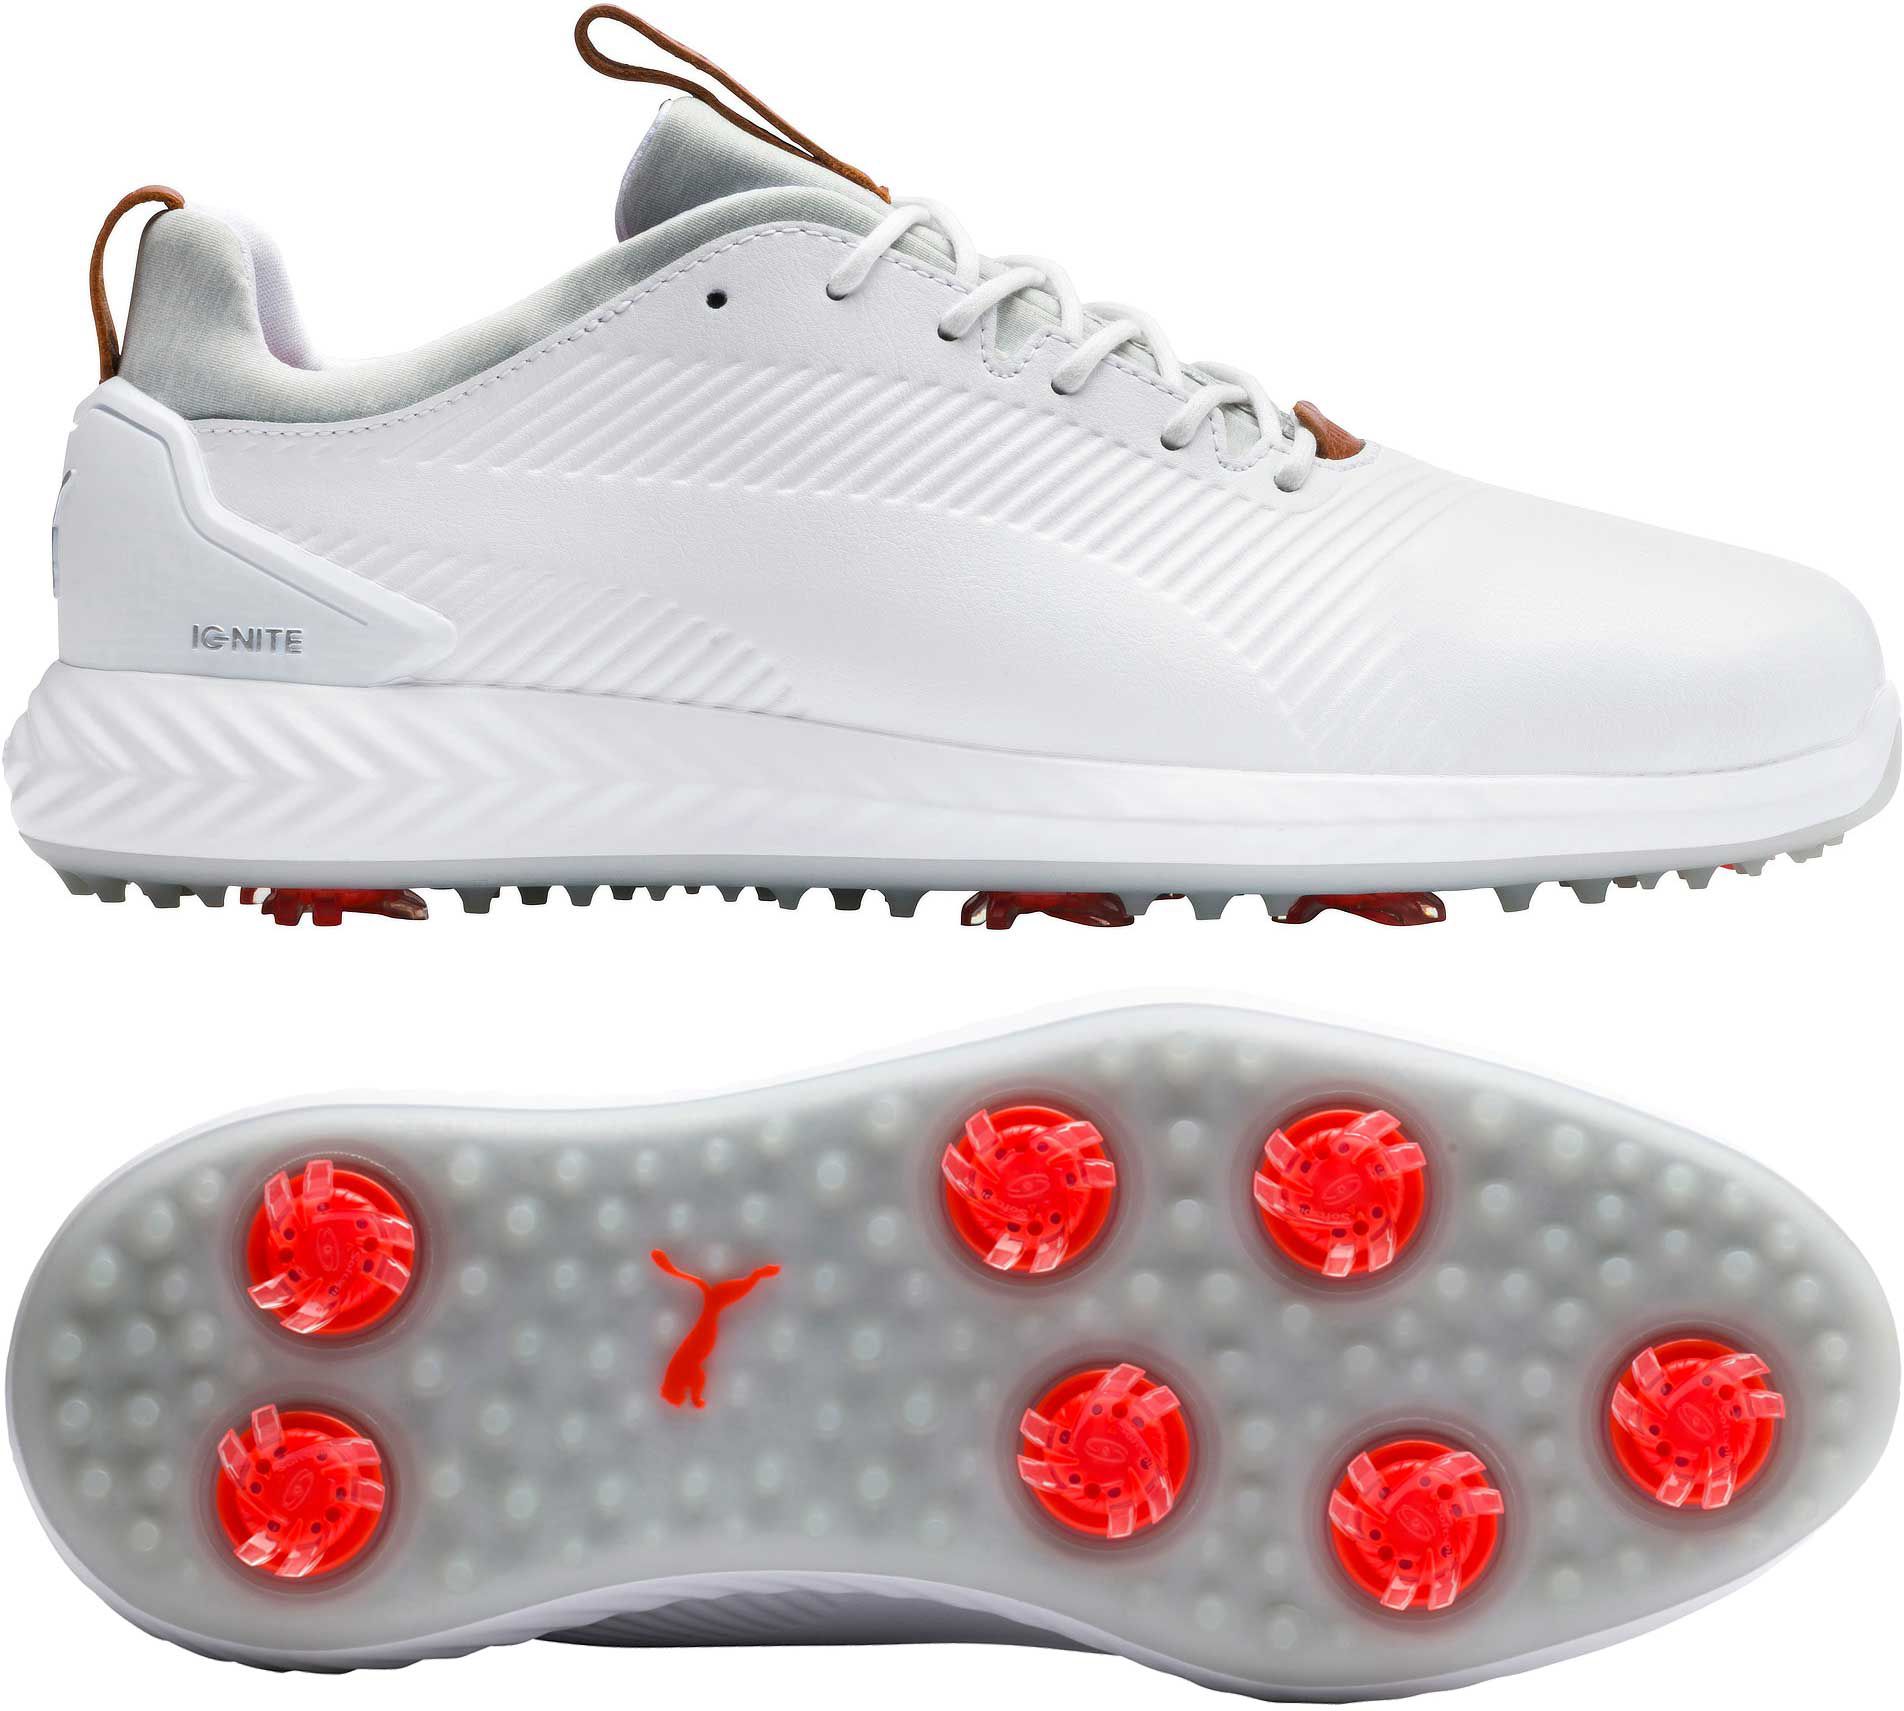 puma men's ignite pwradapt leather golf shoe